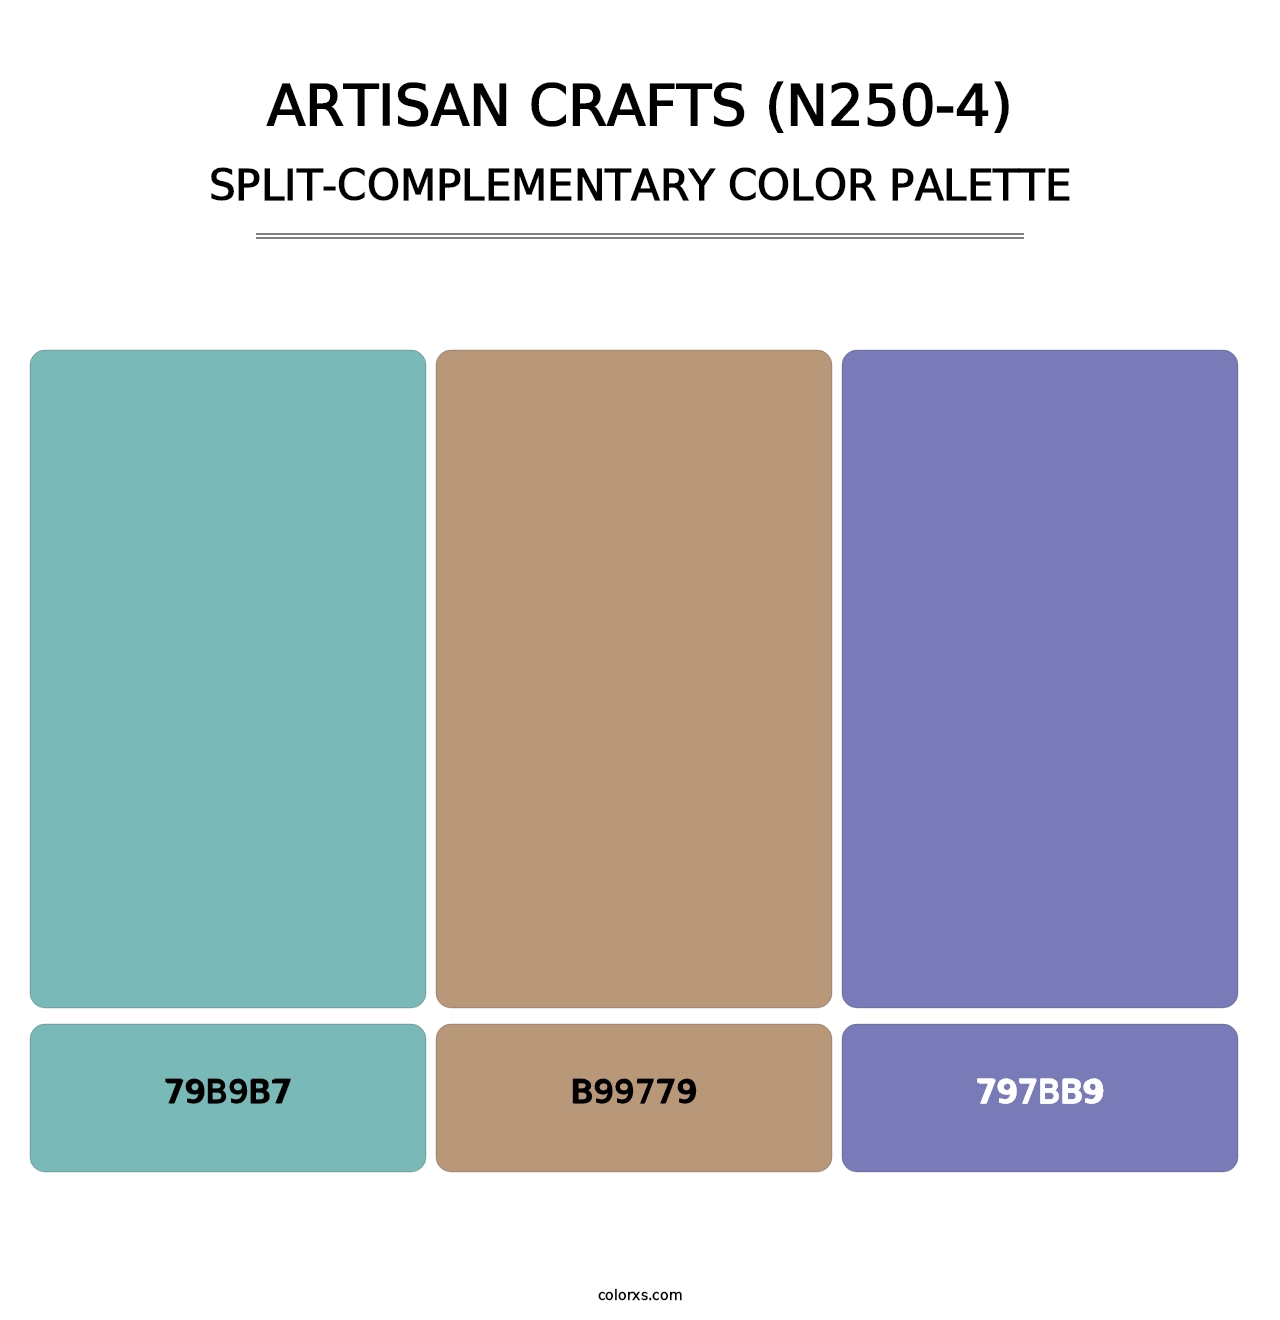 Artisan Crafts (N250-4) - Split-Complementary Color Palette